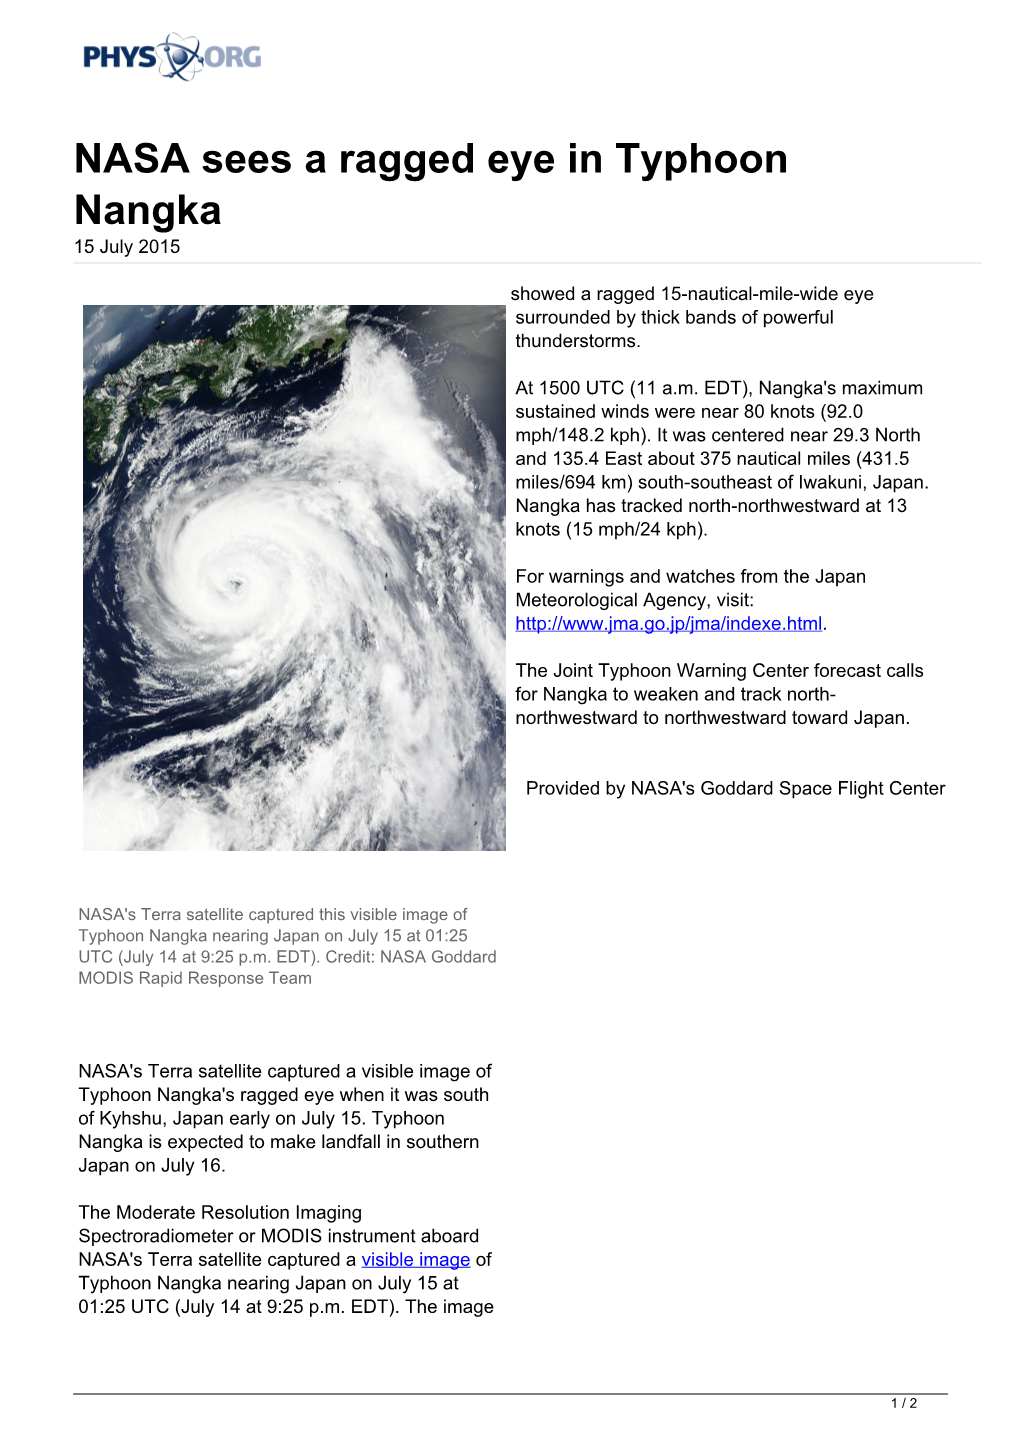 NASA Sees a Ragged Eye in Typhoon Nangka 15 July 2015